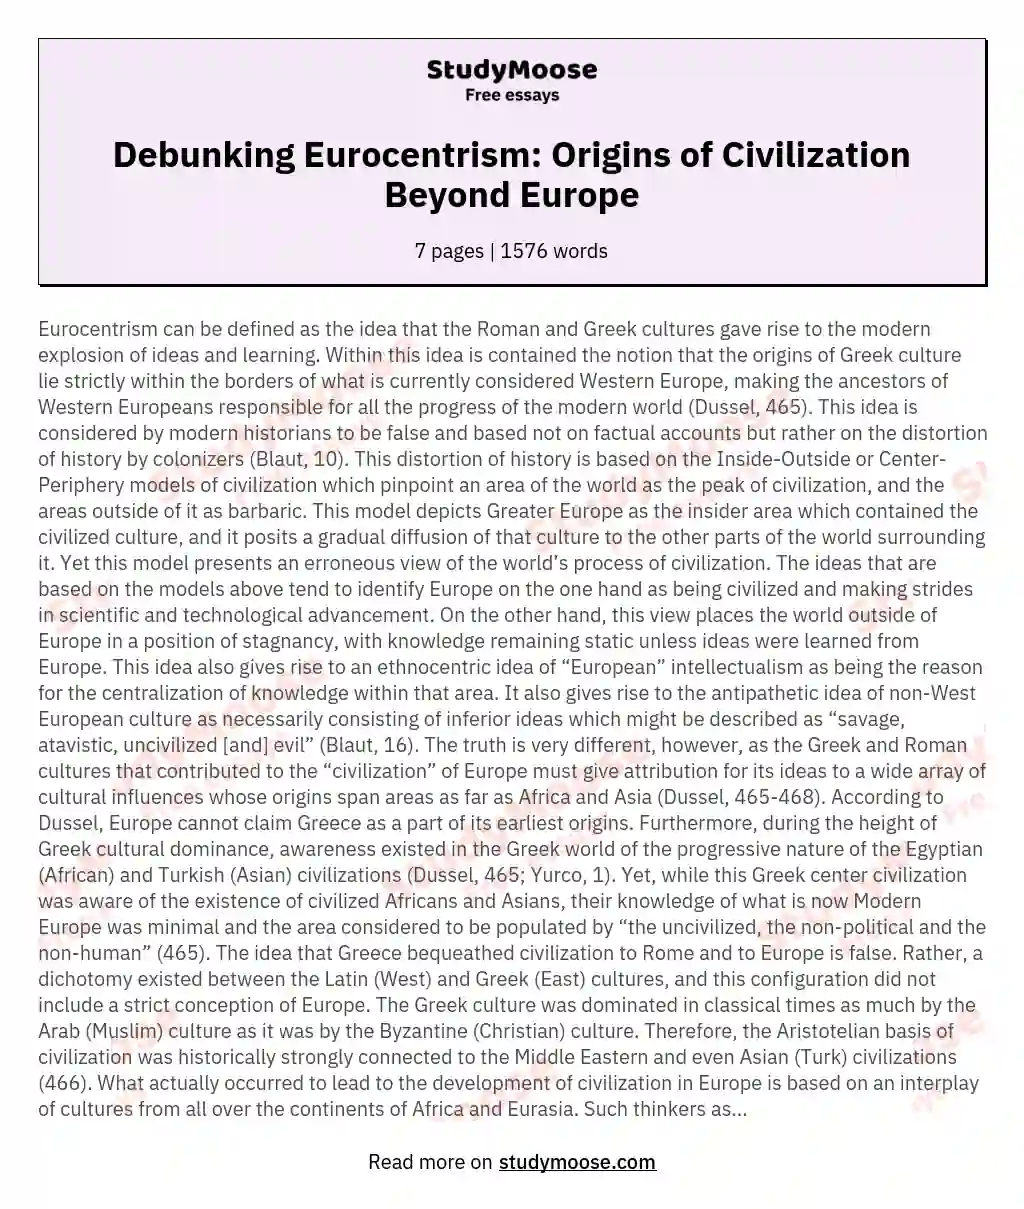 Debunking Eurocentrism: Origins of Civilization Beyond Europe essay